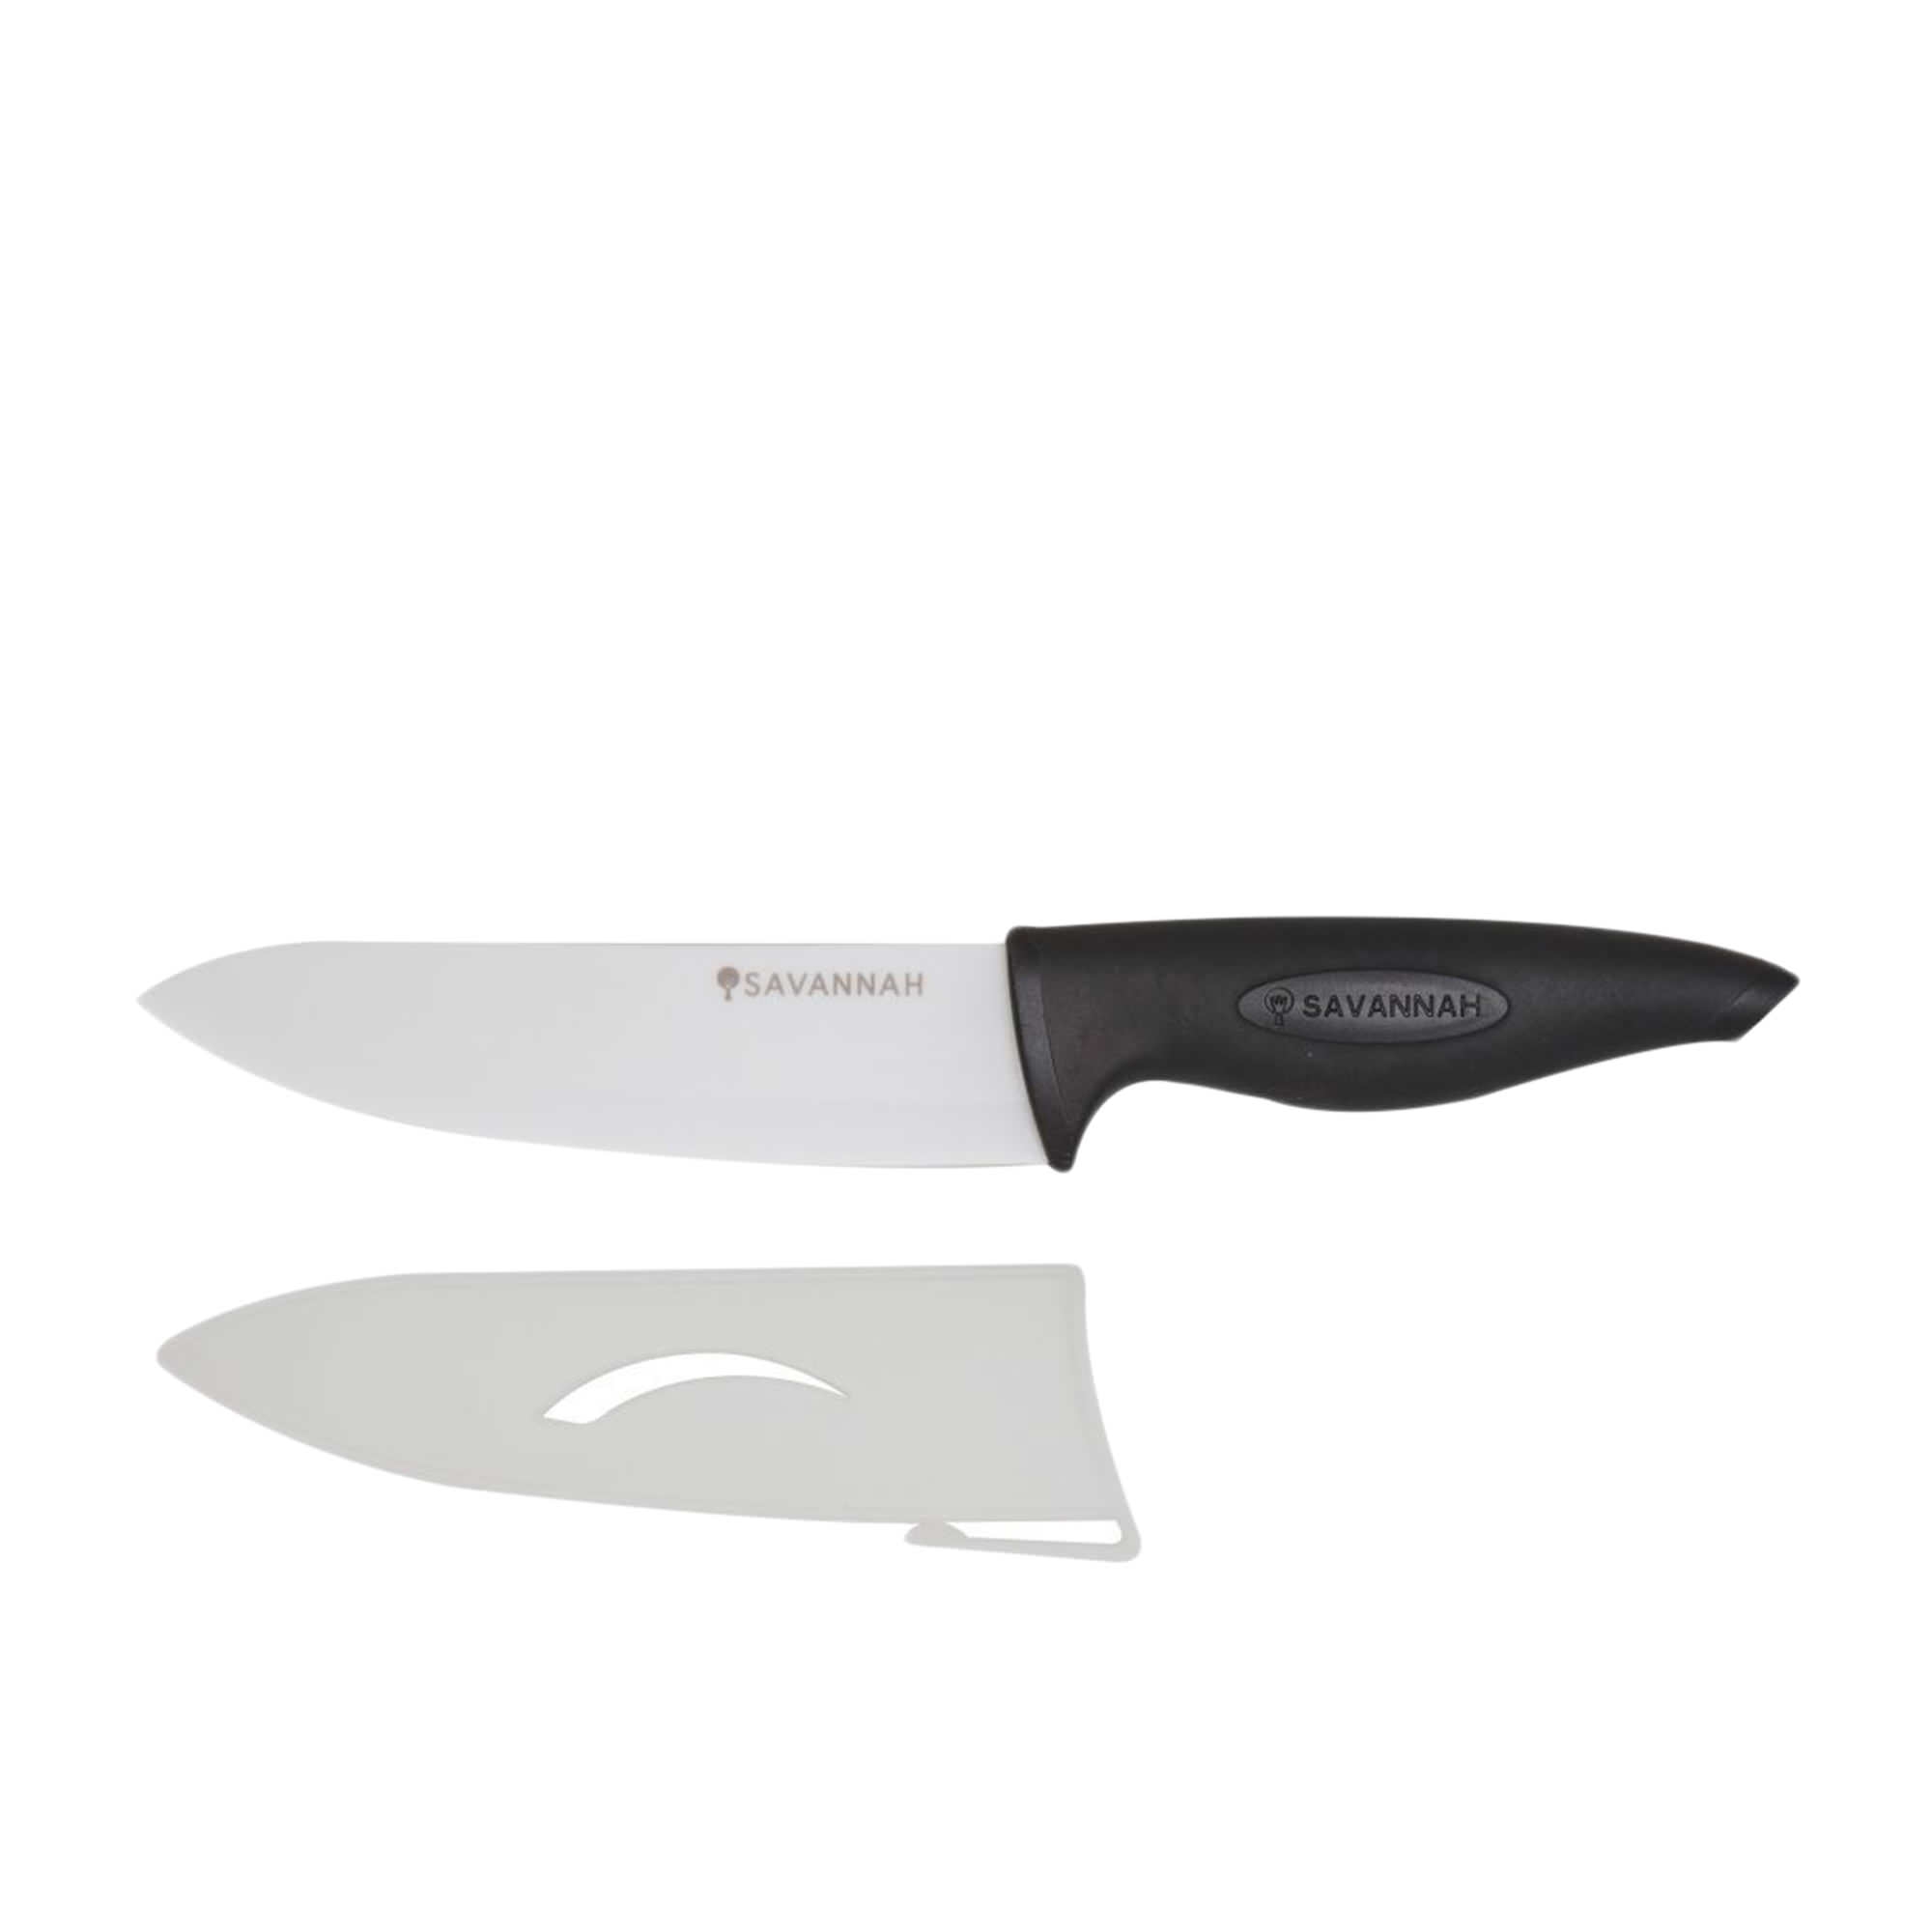 Savannah Ceramic Chefs Knife with Sheath Black 17cm Image 2